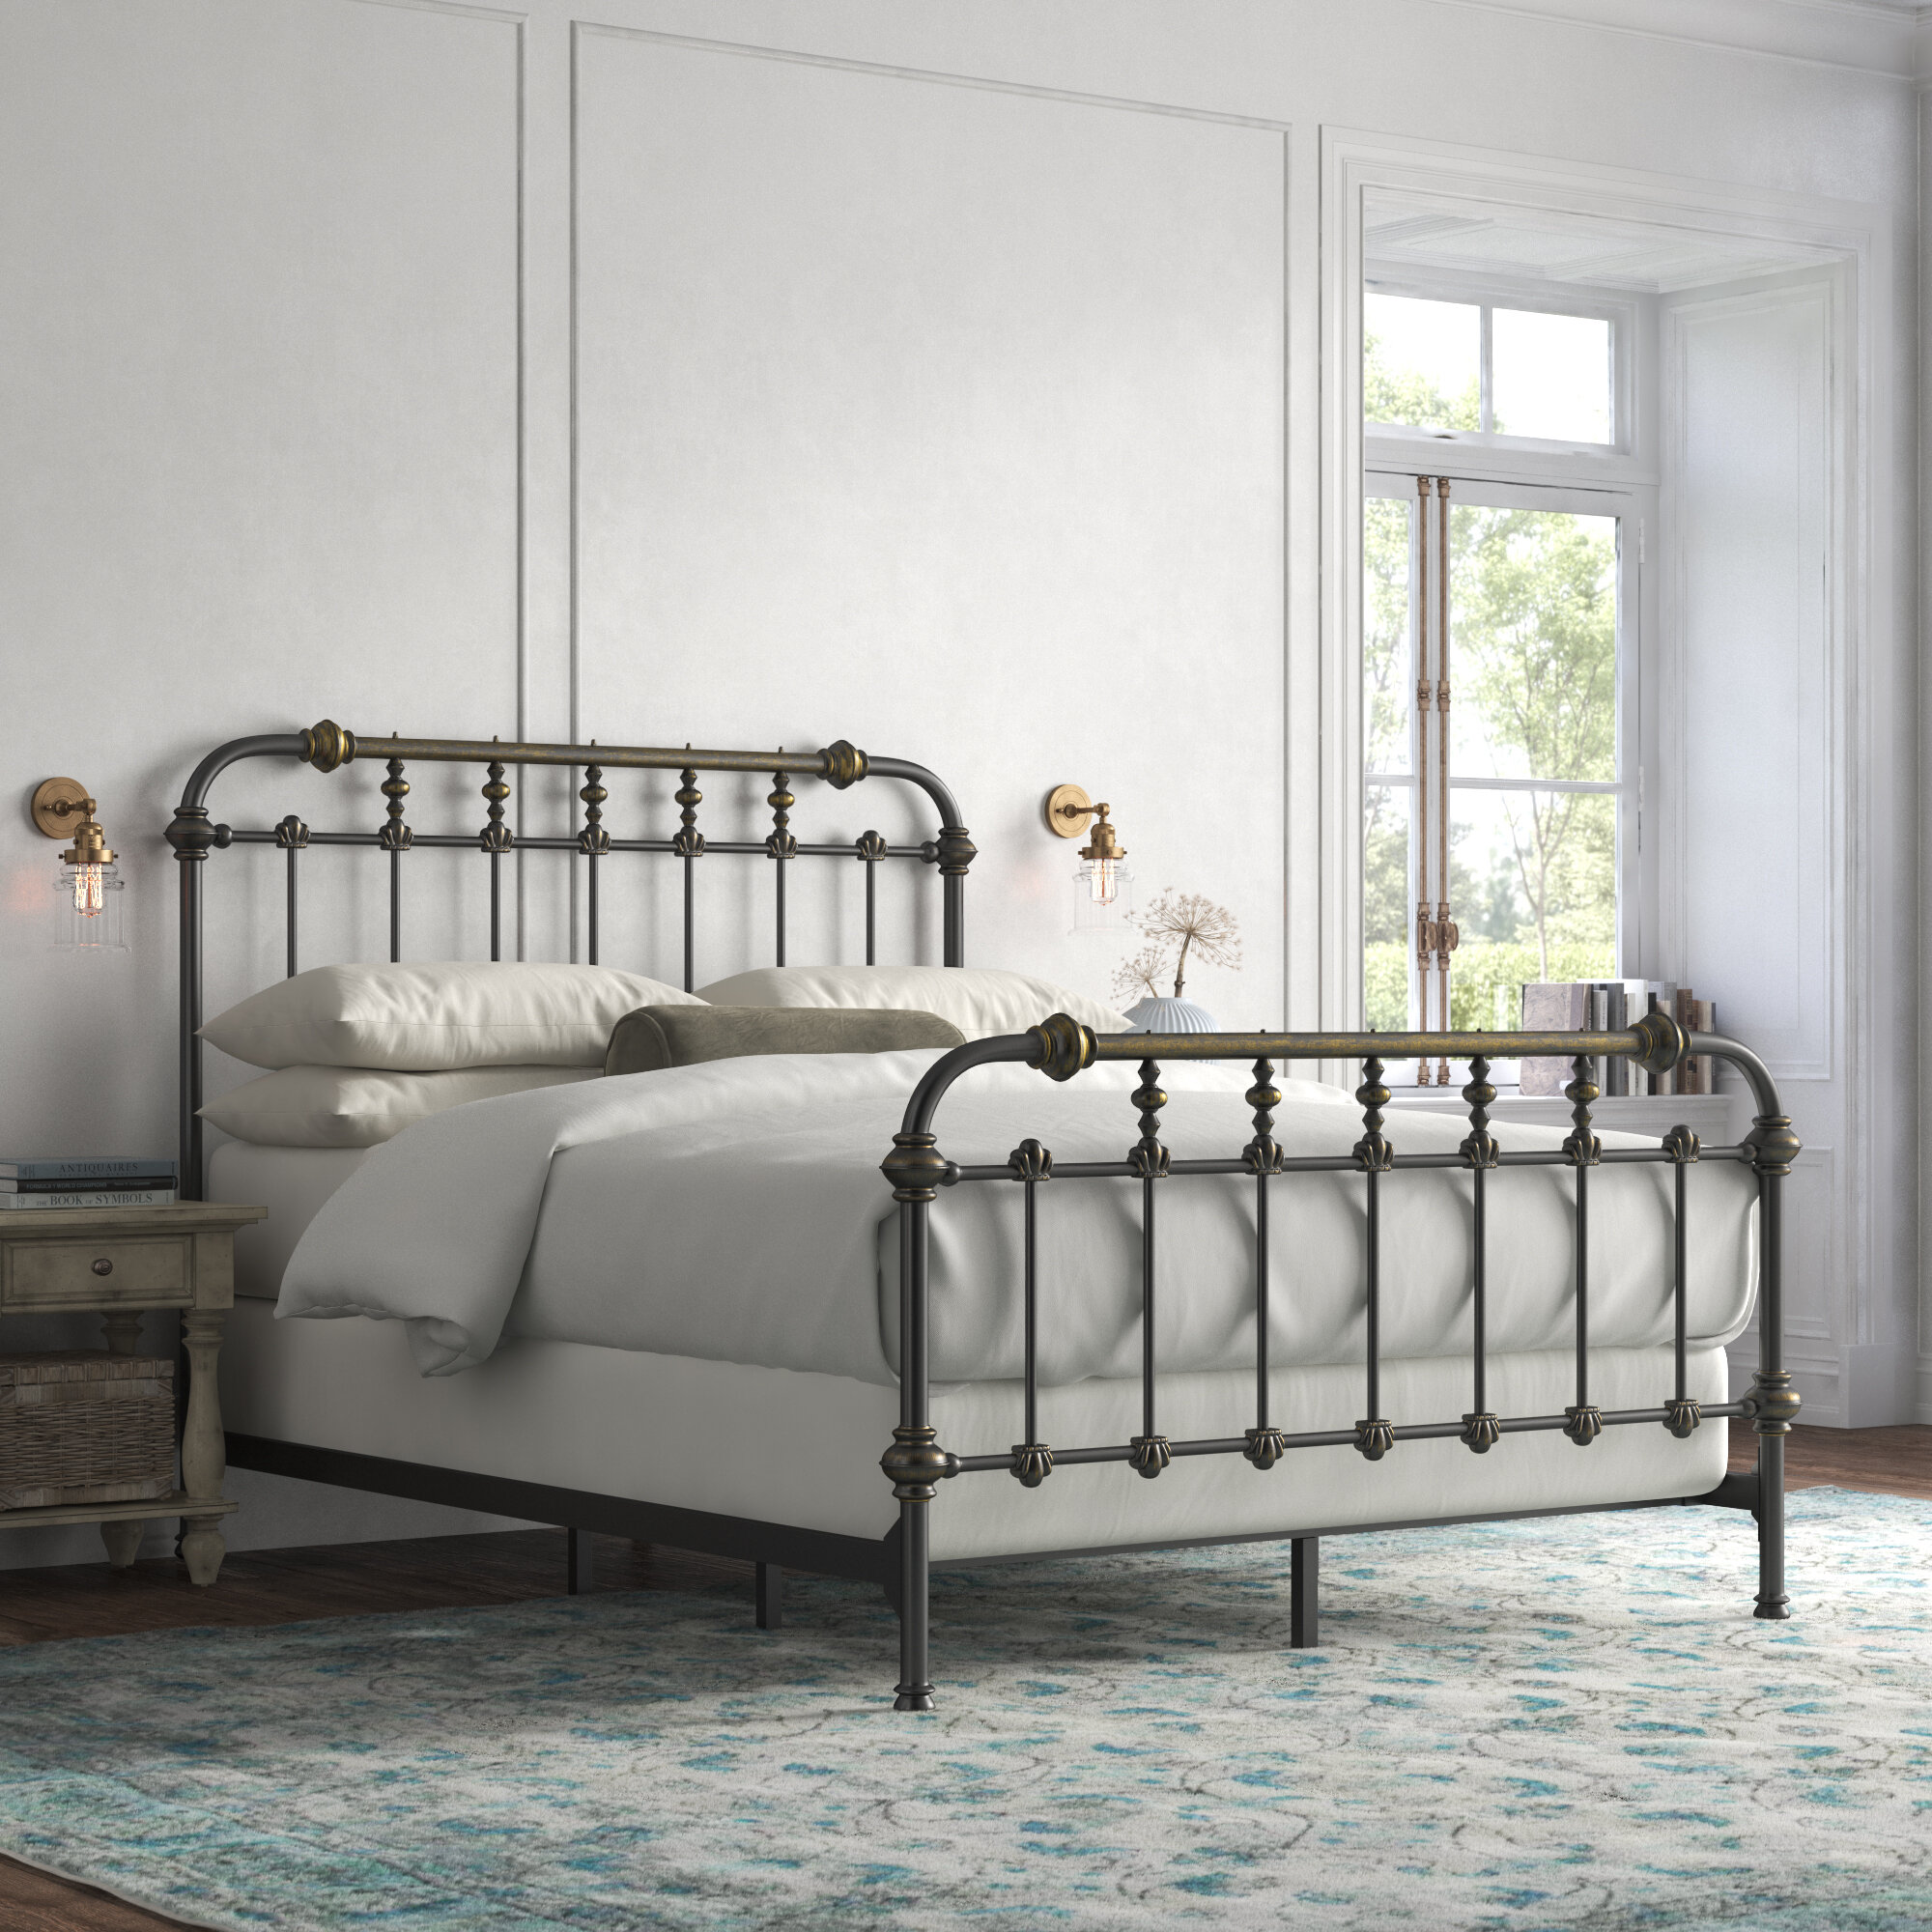 Modern Design Metal Bed Frame Sleep Bedroom Furniture Full Queen King All Colors 